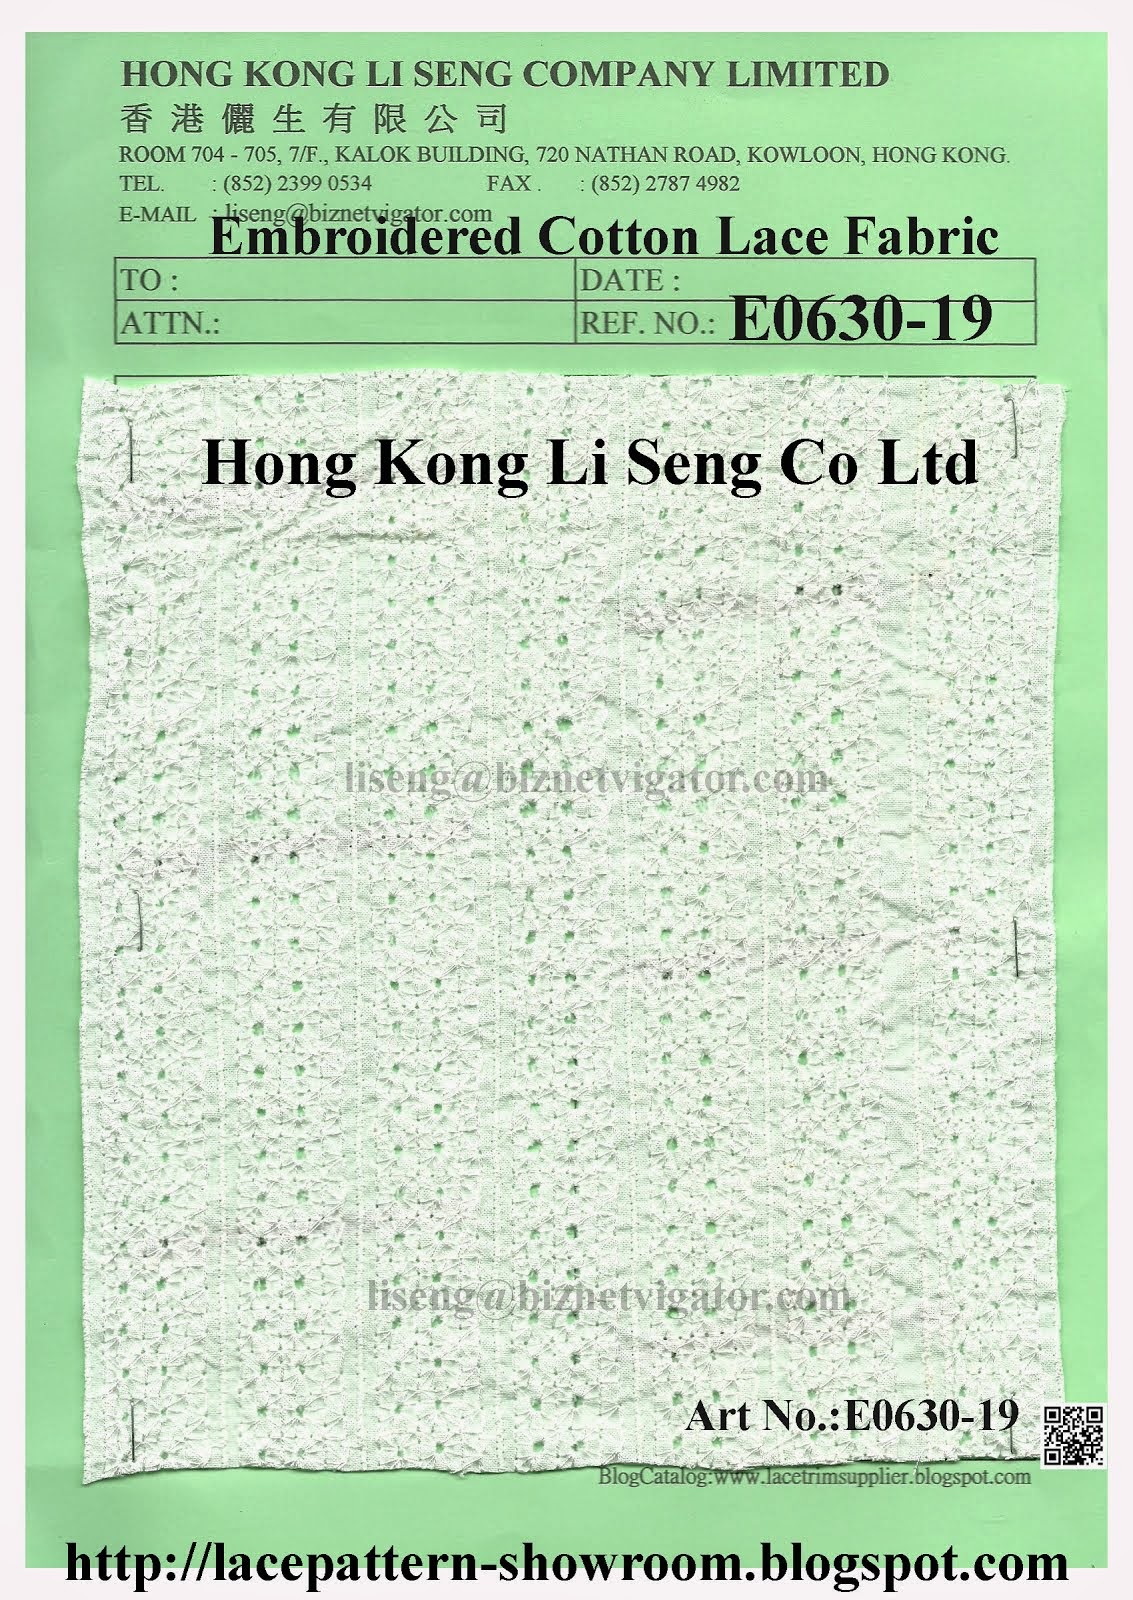 Embroidered Cotton Lace Fabric Manufacturer - Hong Kong Li Seng Co Ltd